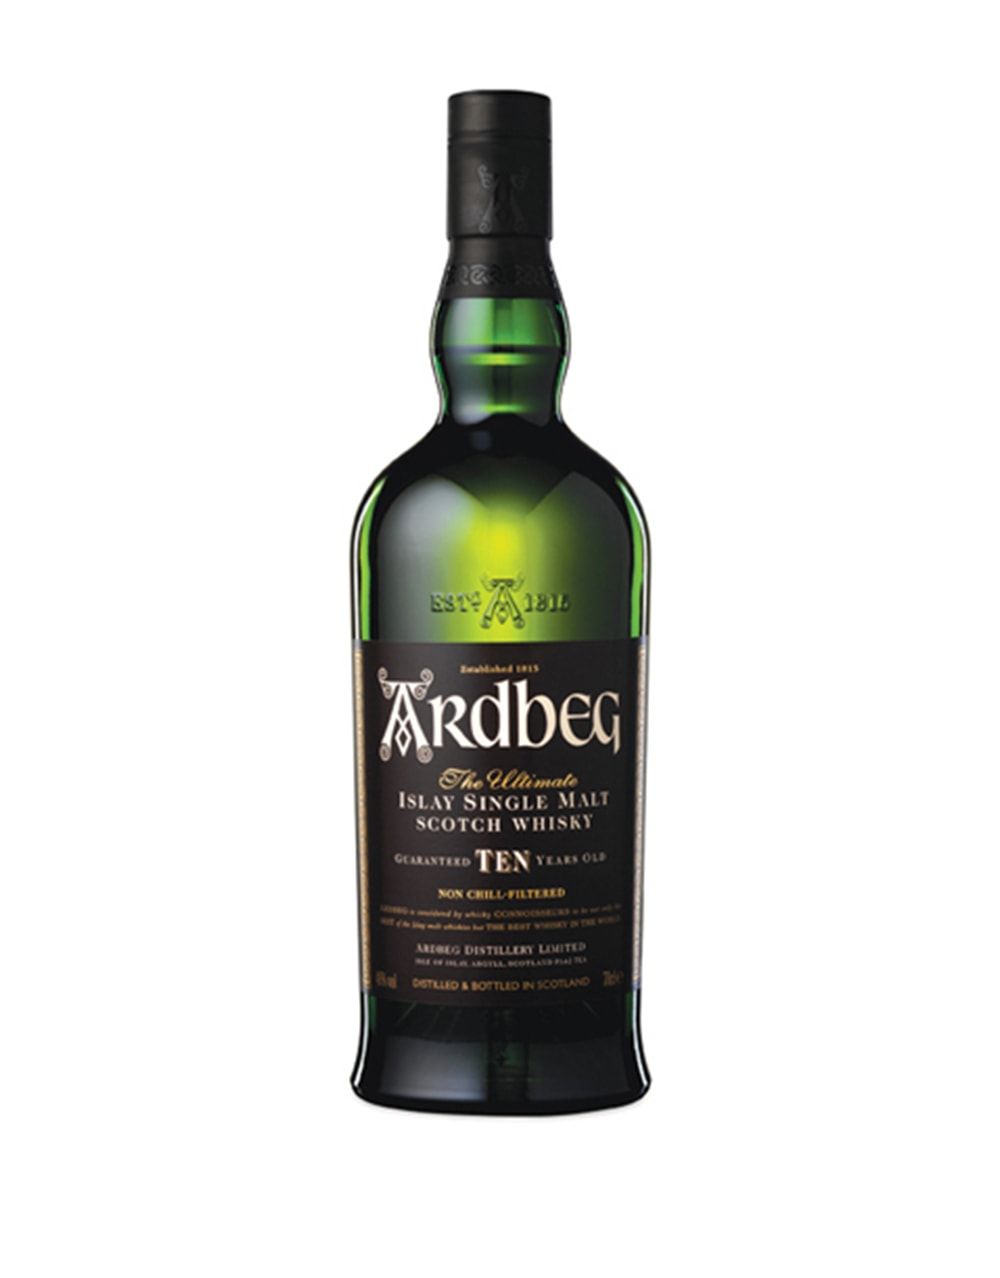 Ardbeg 10-Year-Old Single Malt Scotch Whisky bottle